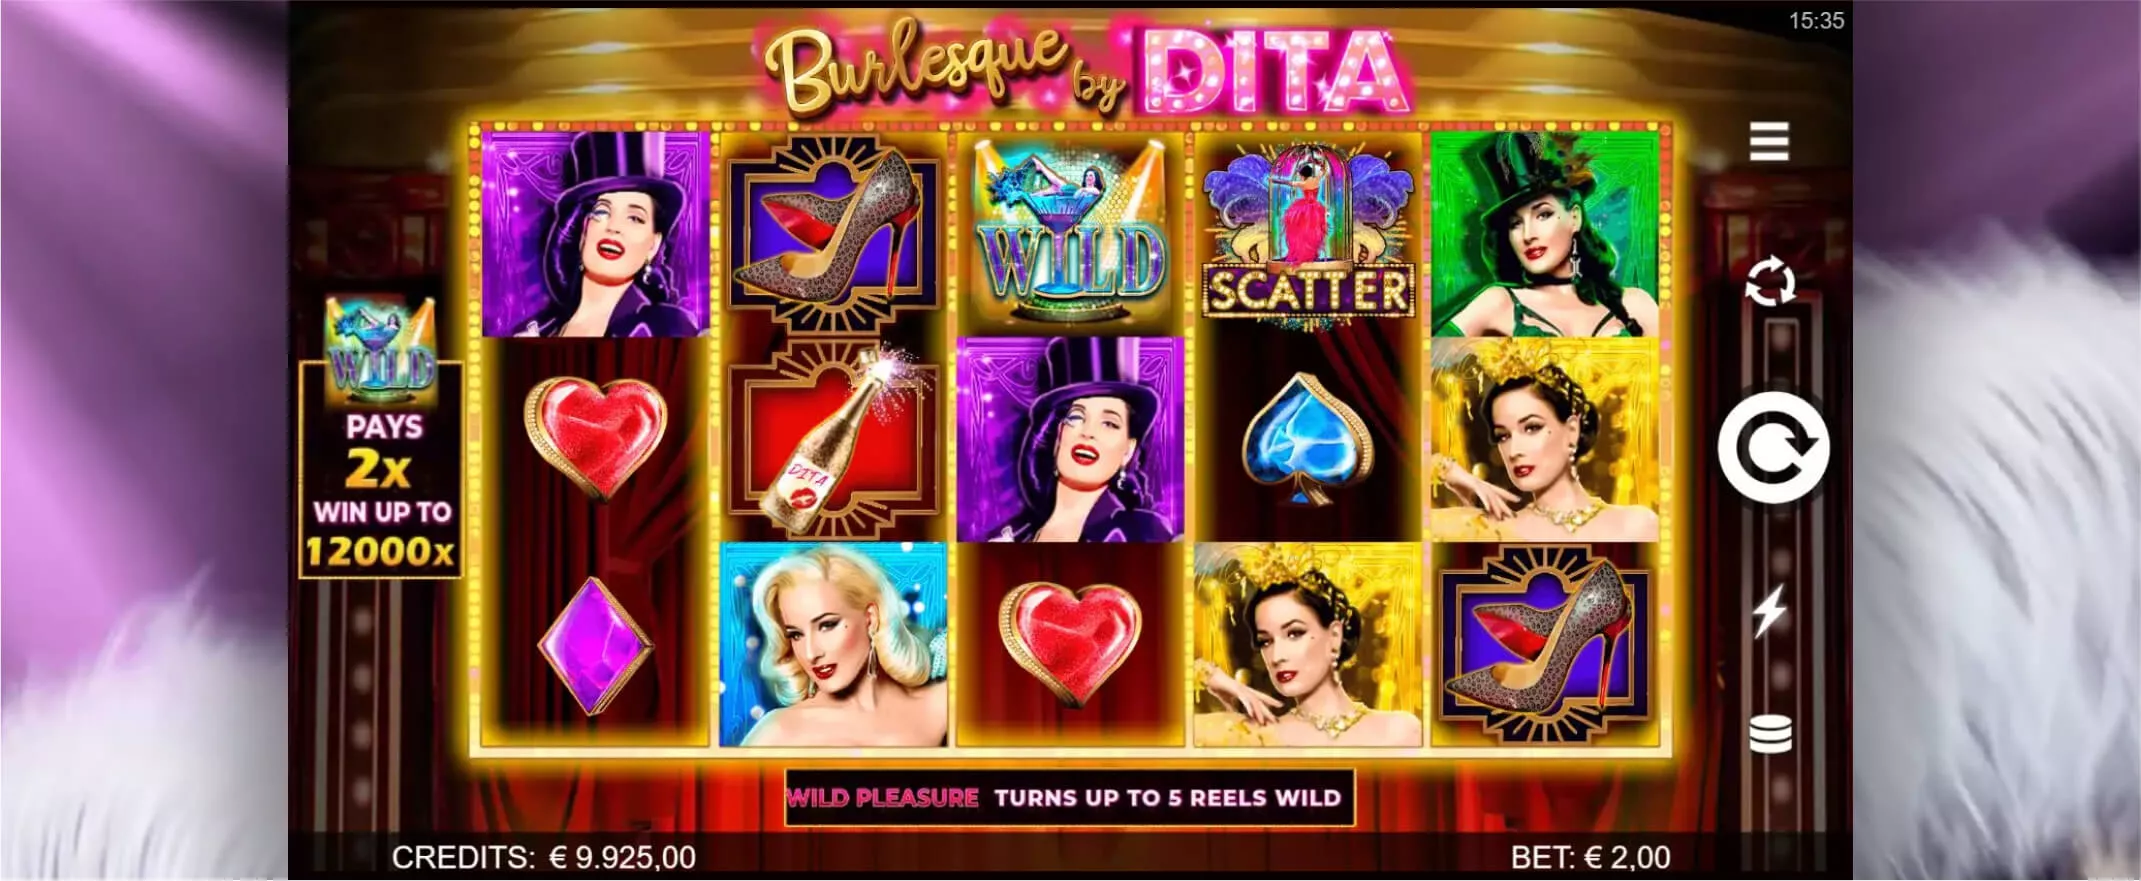 Burlesque by Dita slot screenshot of the reels